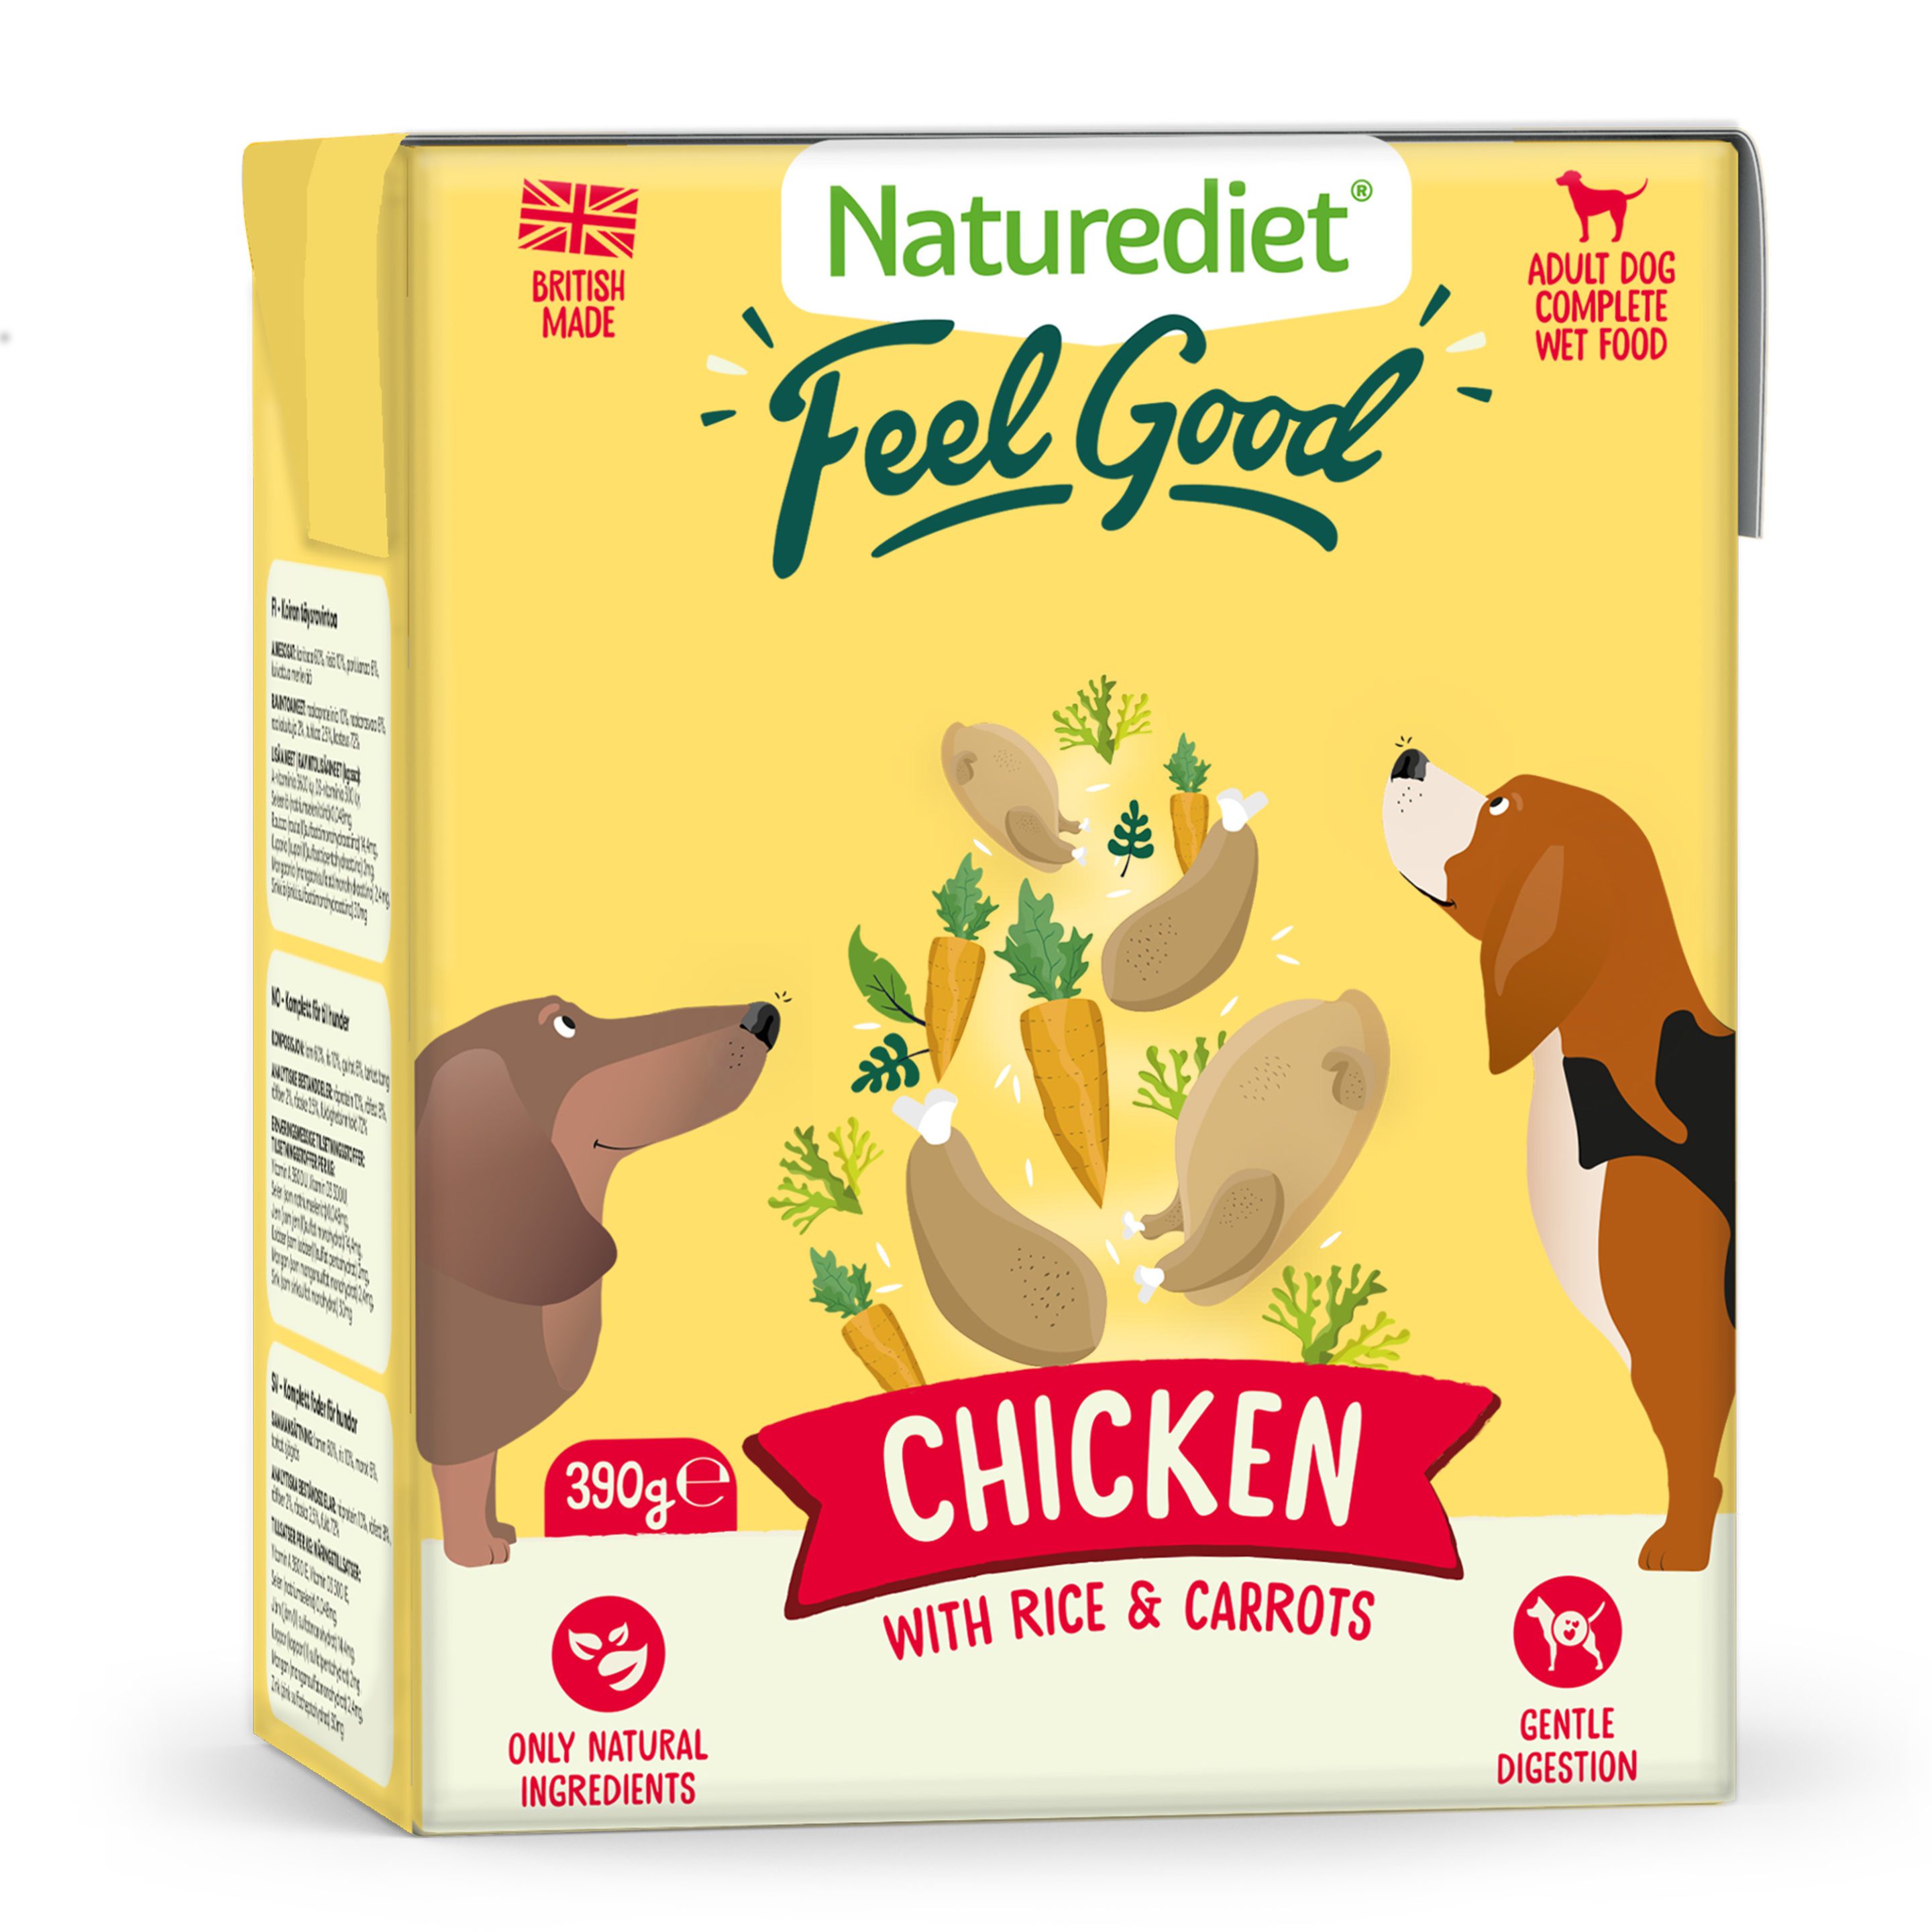 Feel Good Chicken 390g recyclable carton